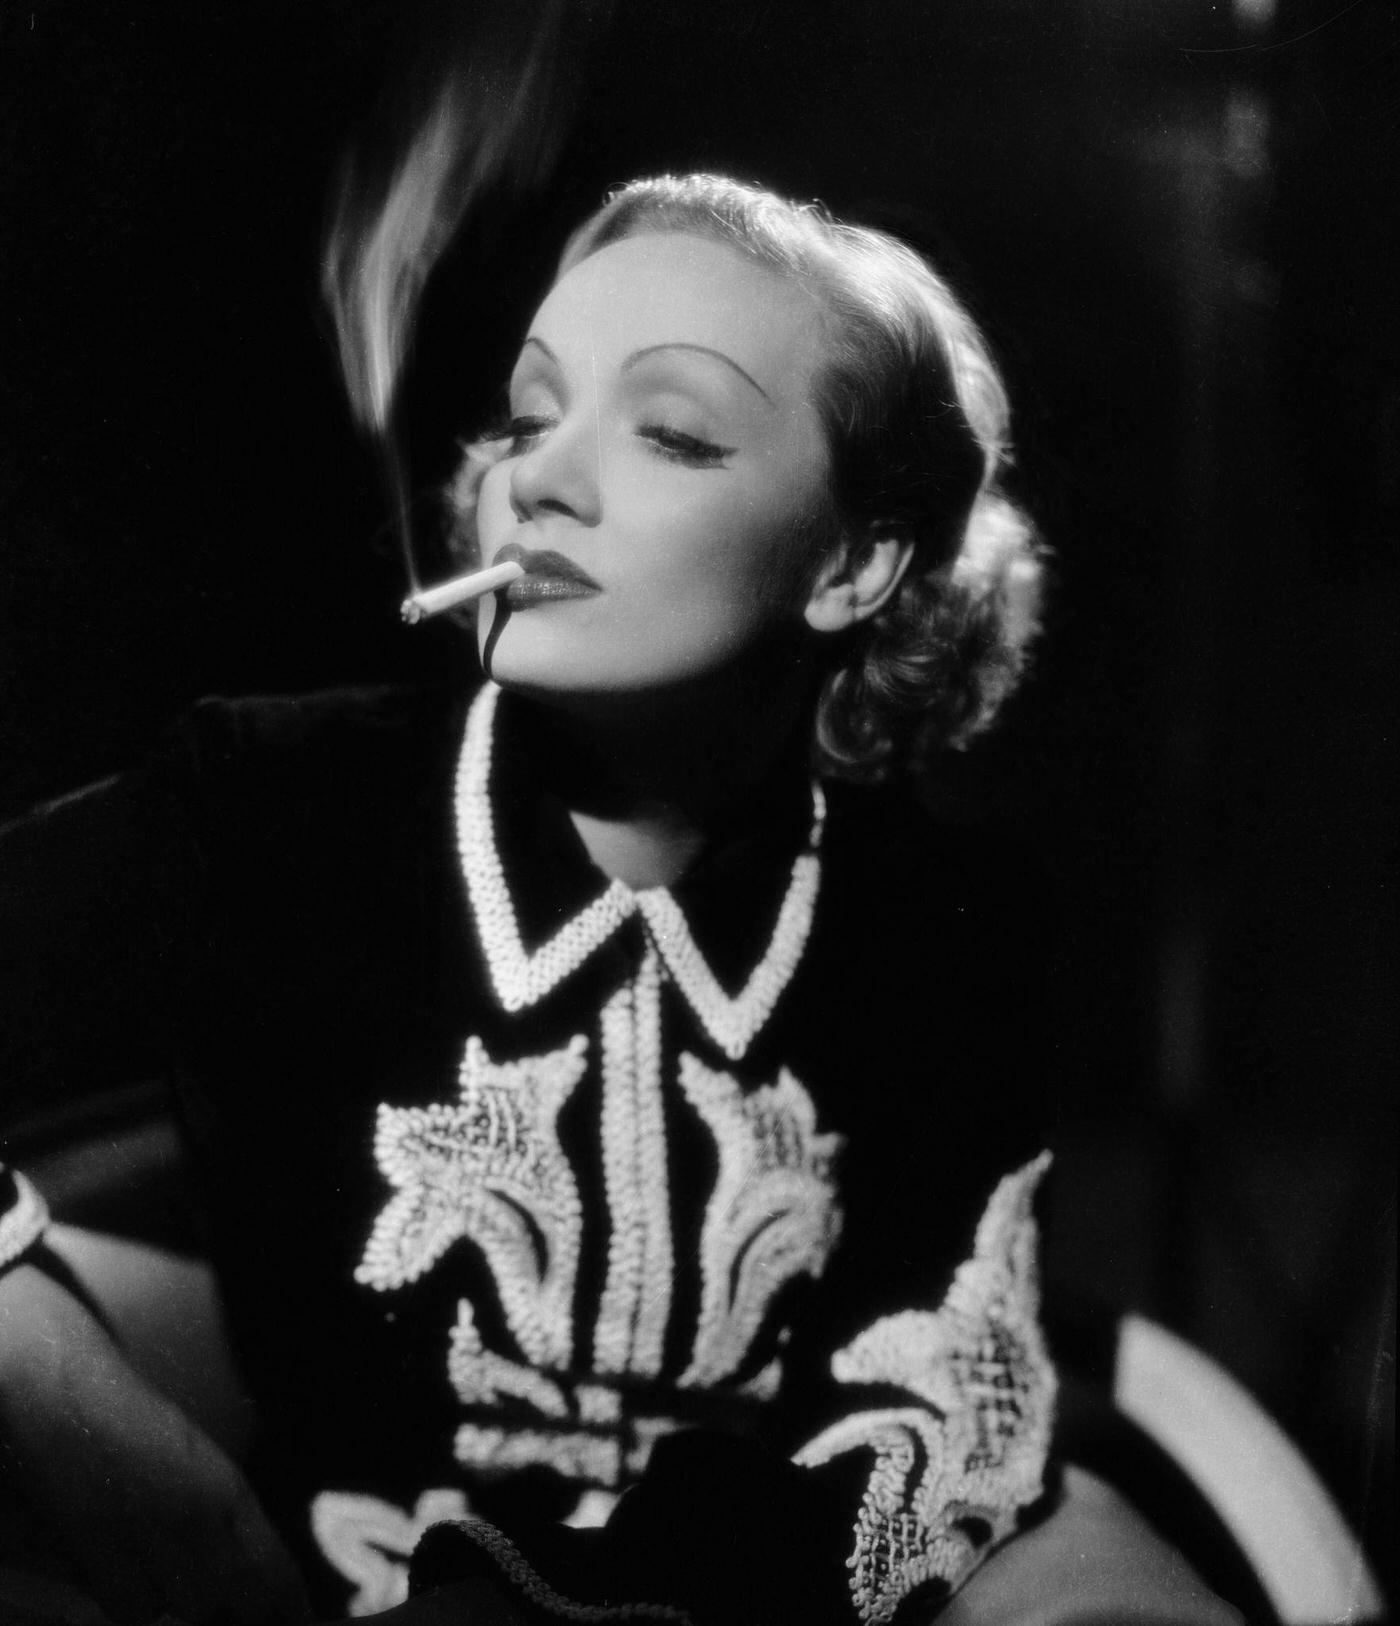 Film star Marlene Dietrich stars in the film 'Angel', 1937